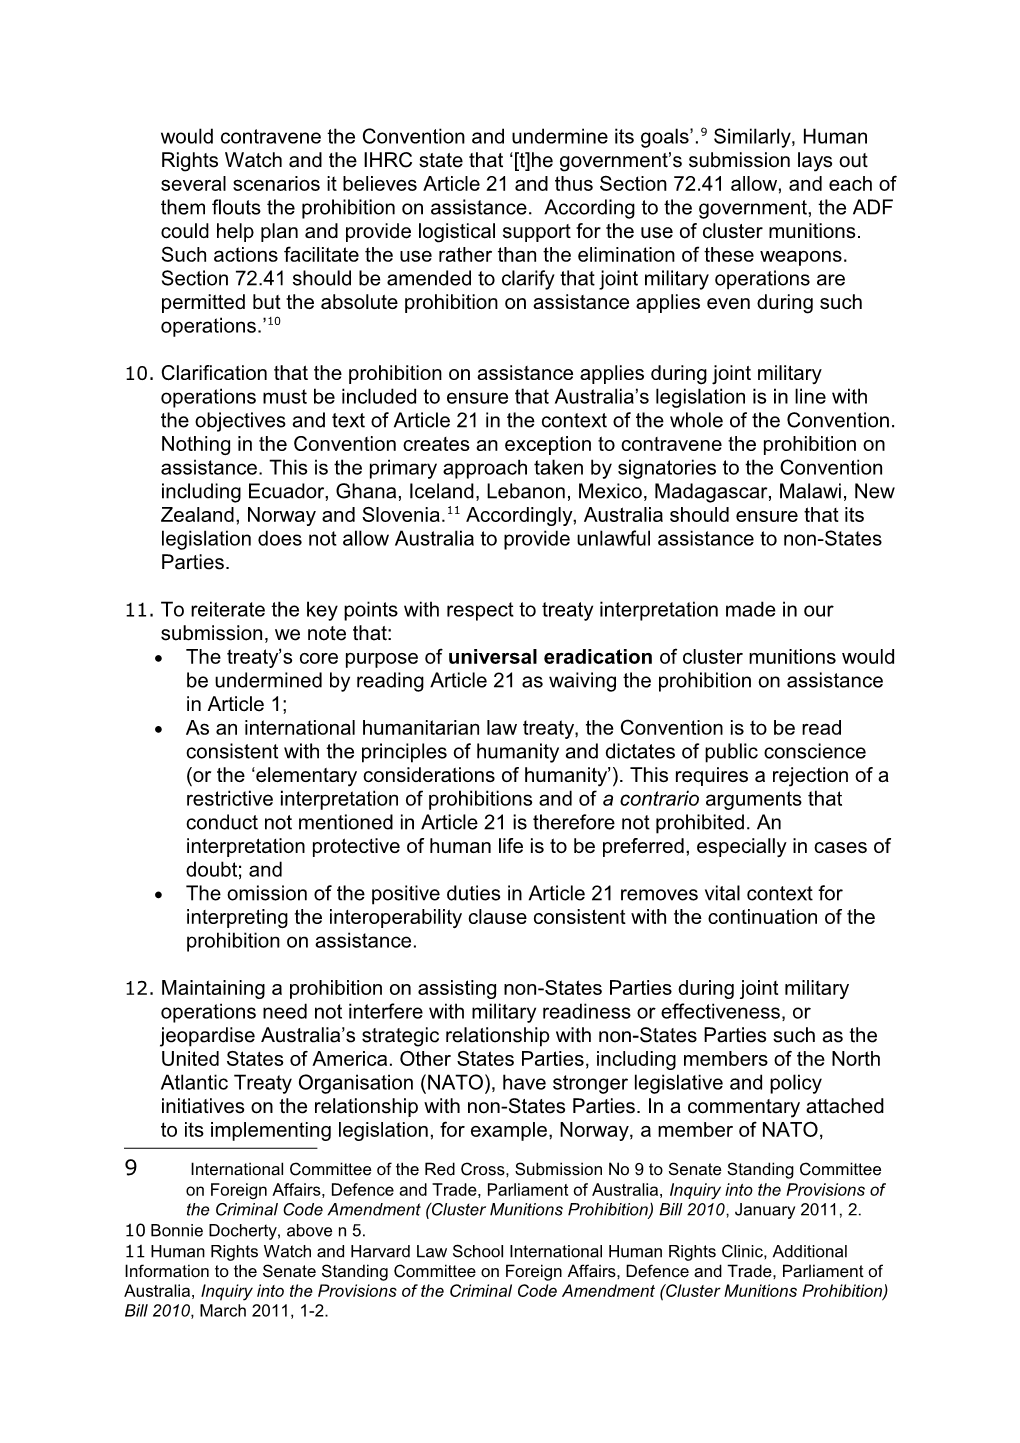 Provisions of the Criminal Code Amendment (Cluster Munitions Prohibition) Bill 2010